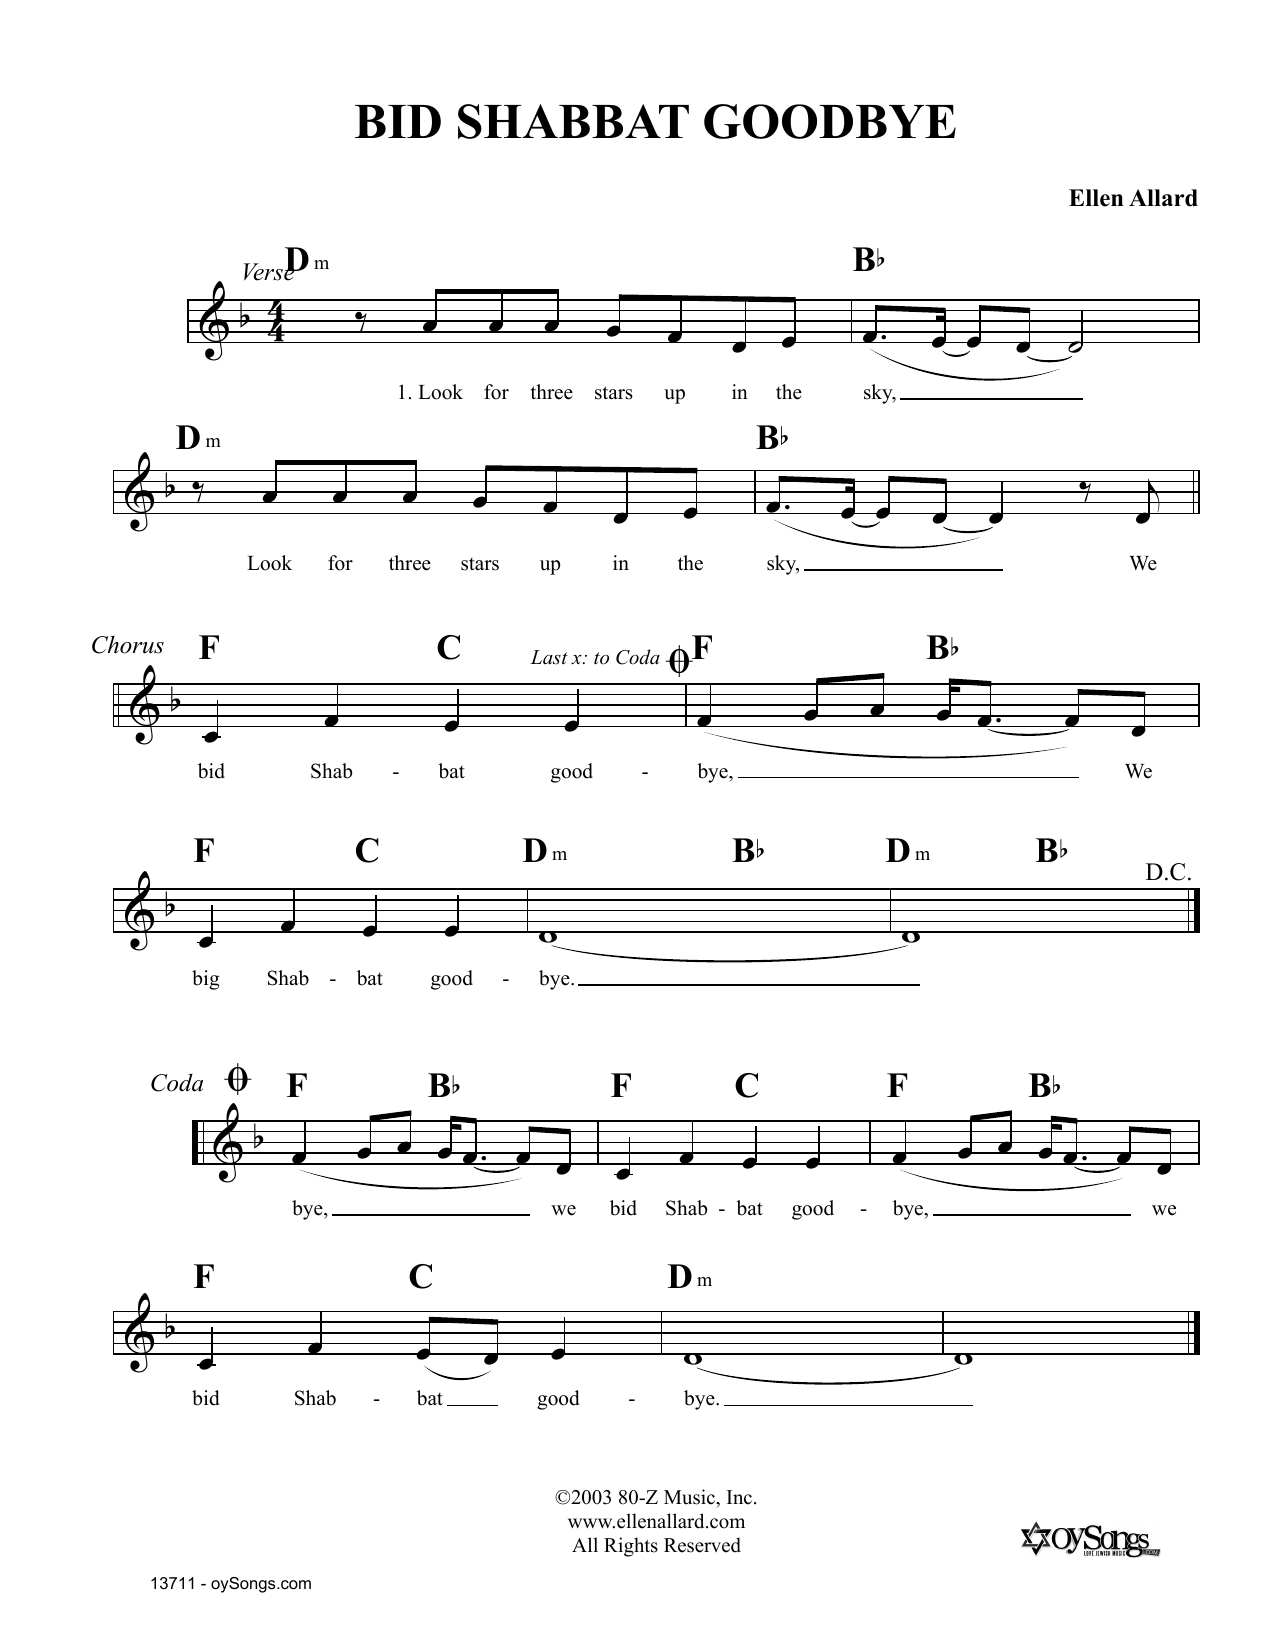 Ellen Allard Bid Shabbat Goodbye Sheet Music Notes & Chords for Melody Line, Lyrics & Chords - Download or Print PDF